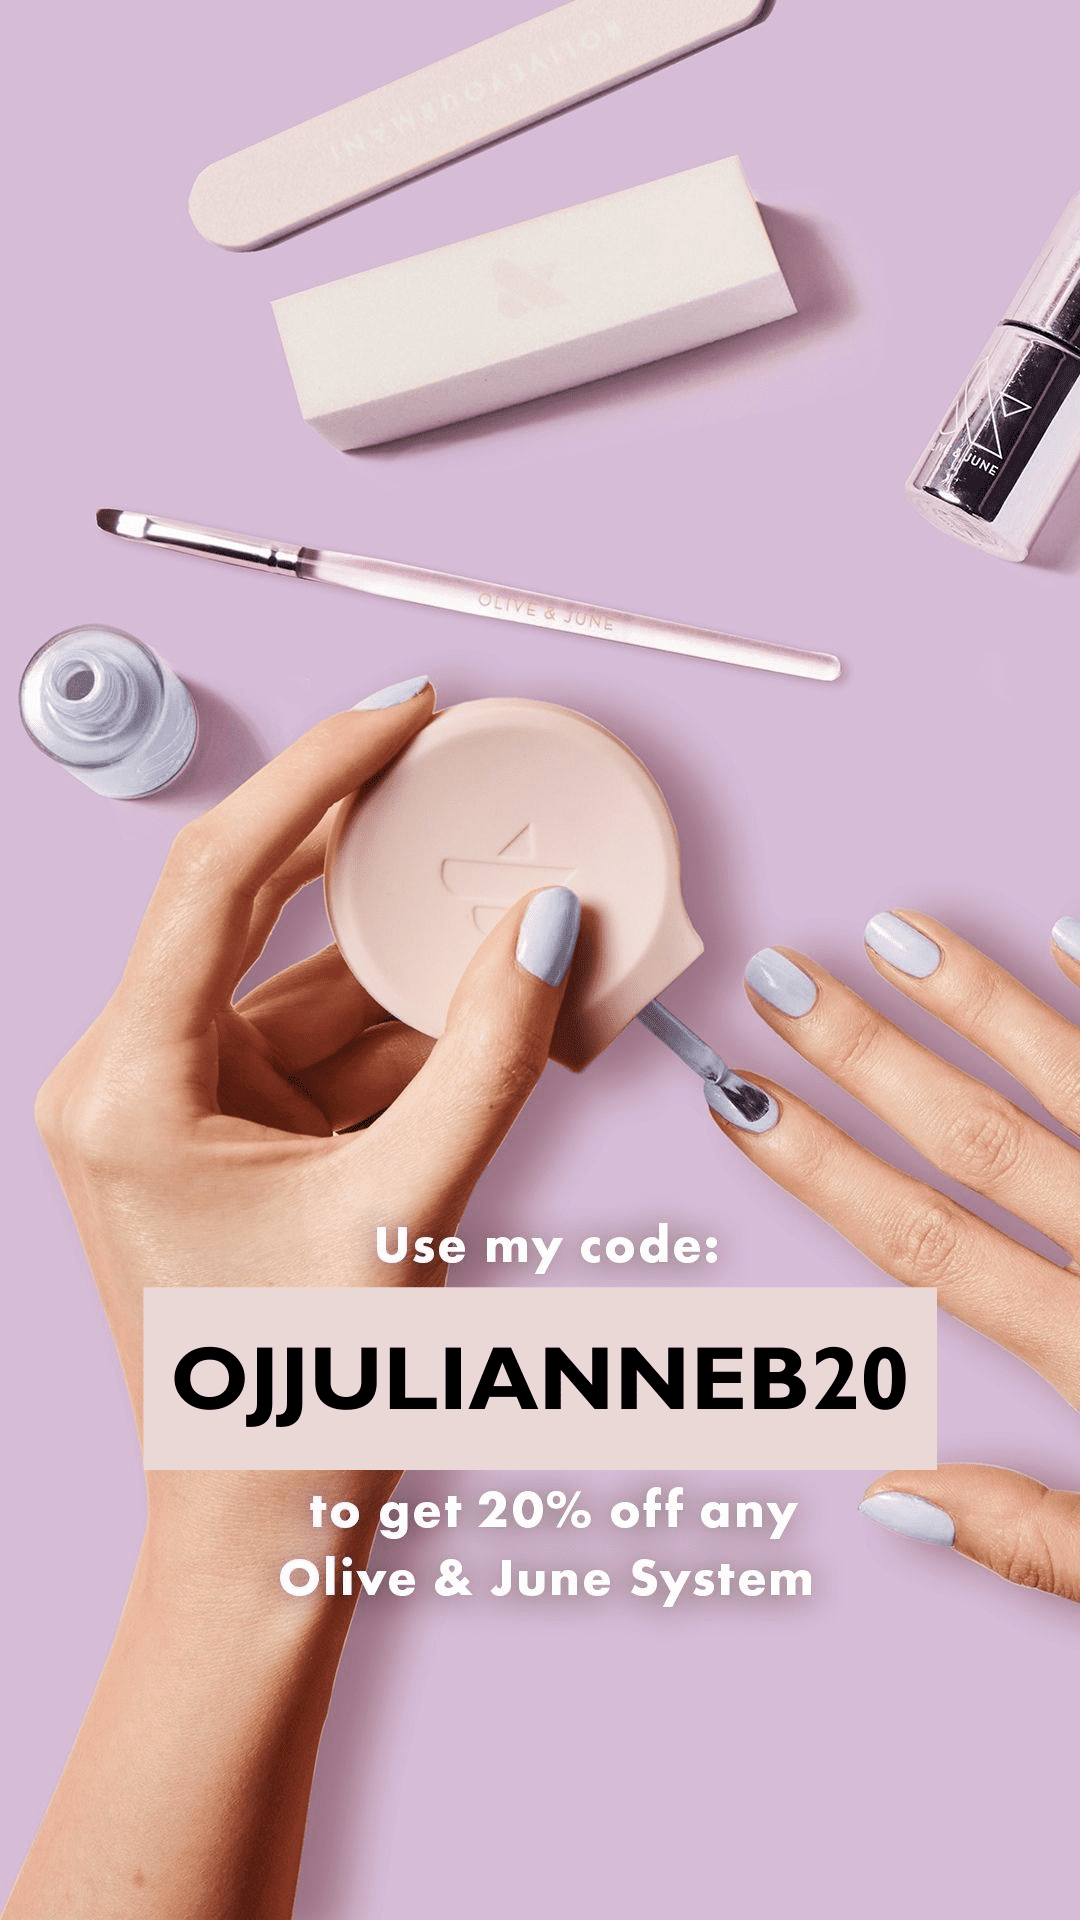 Olive & June discount code OJJULIANNEB20